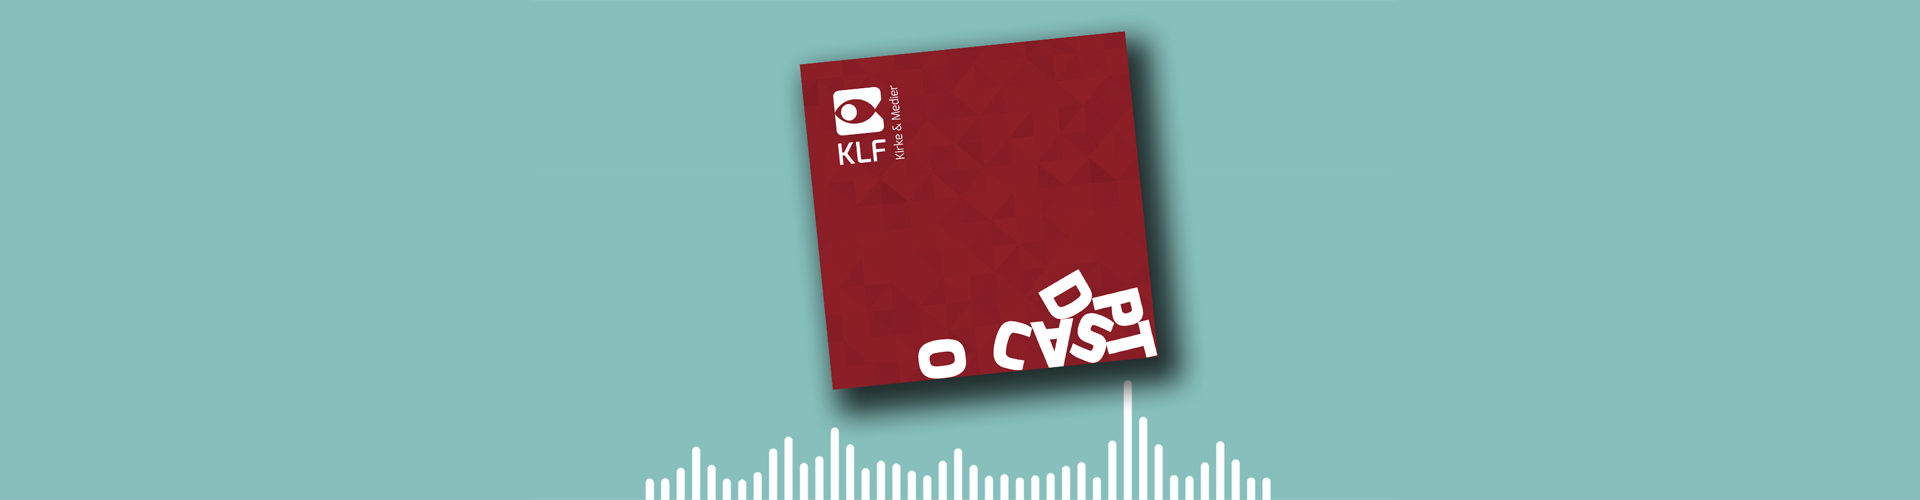 Lyt til KLF